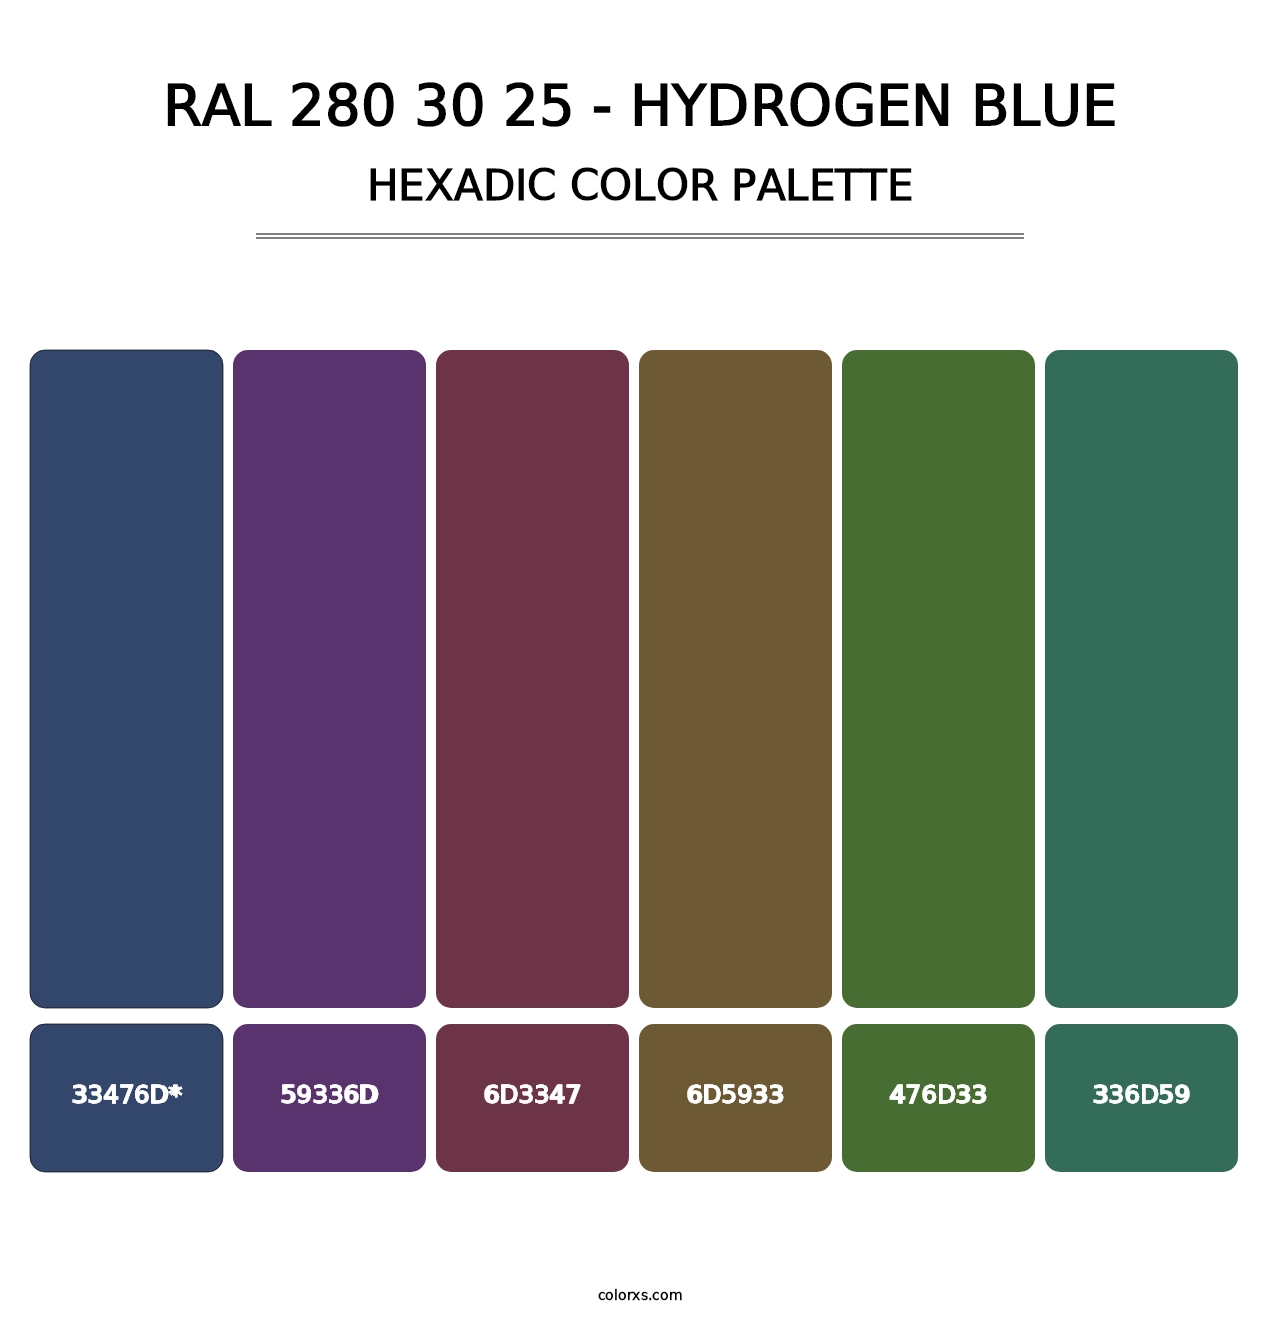 RAL 280 30 25 - Hydrogen Blue - Hexadic Color Palette